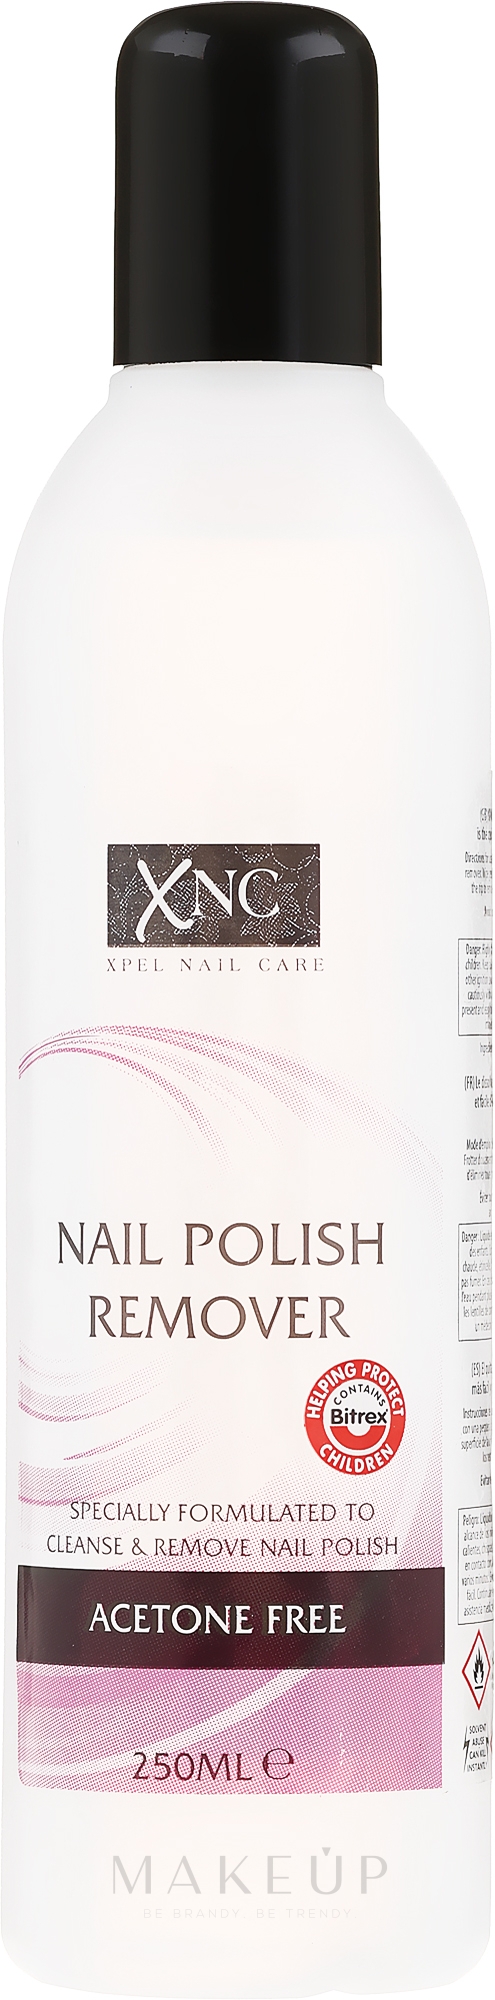 Nagellackentferner - Xpel Marketing Ltd Xnc Nail Polish Remover Acetone Free — Foto 250 ml